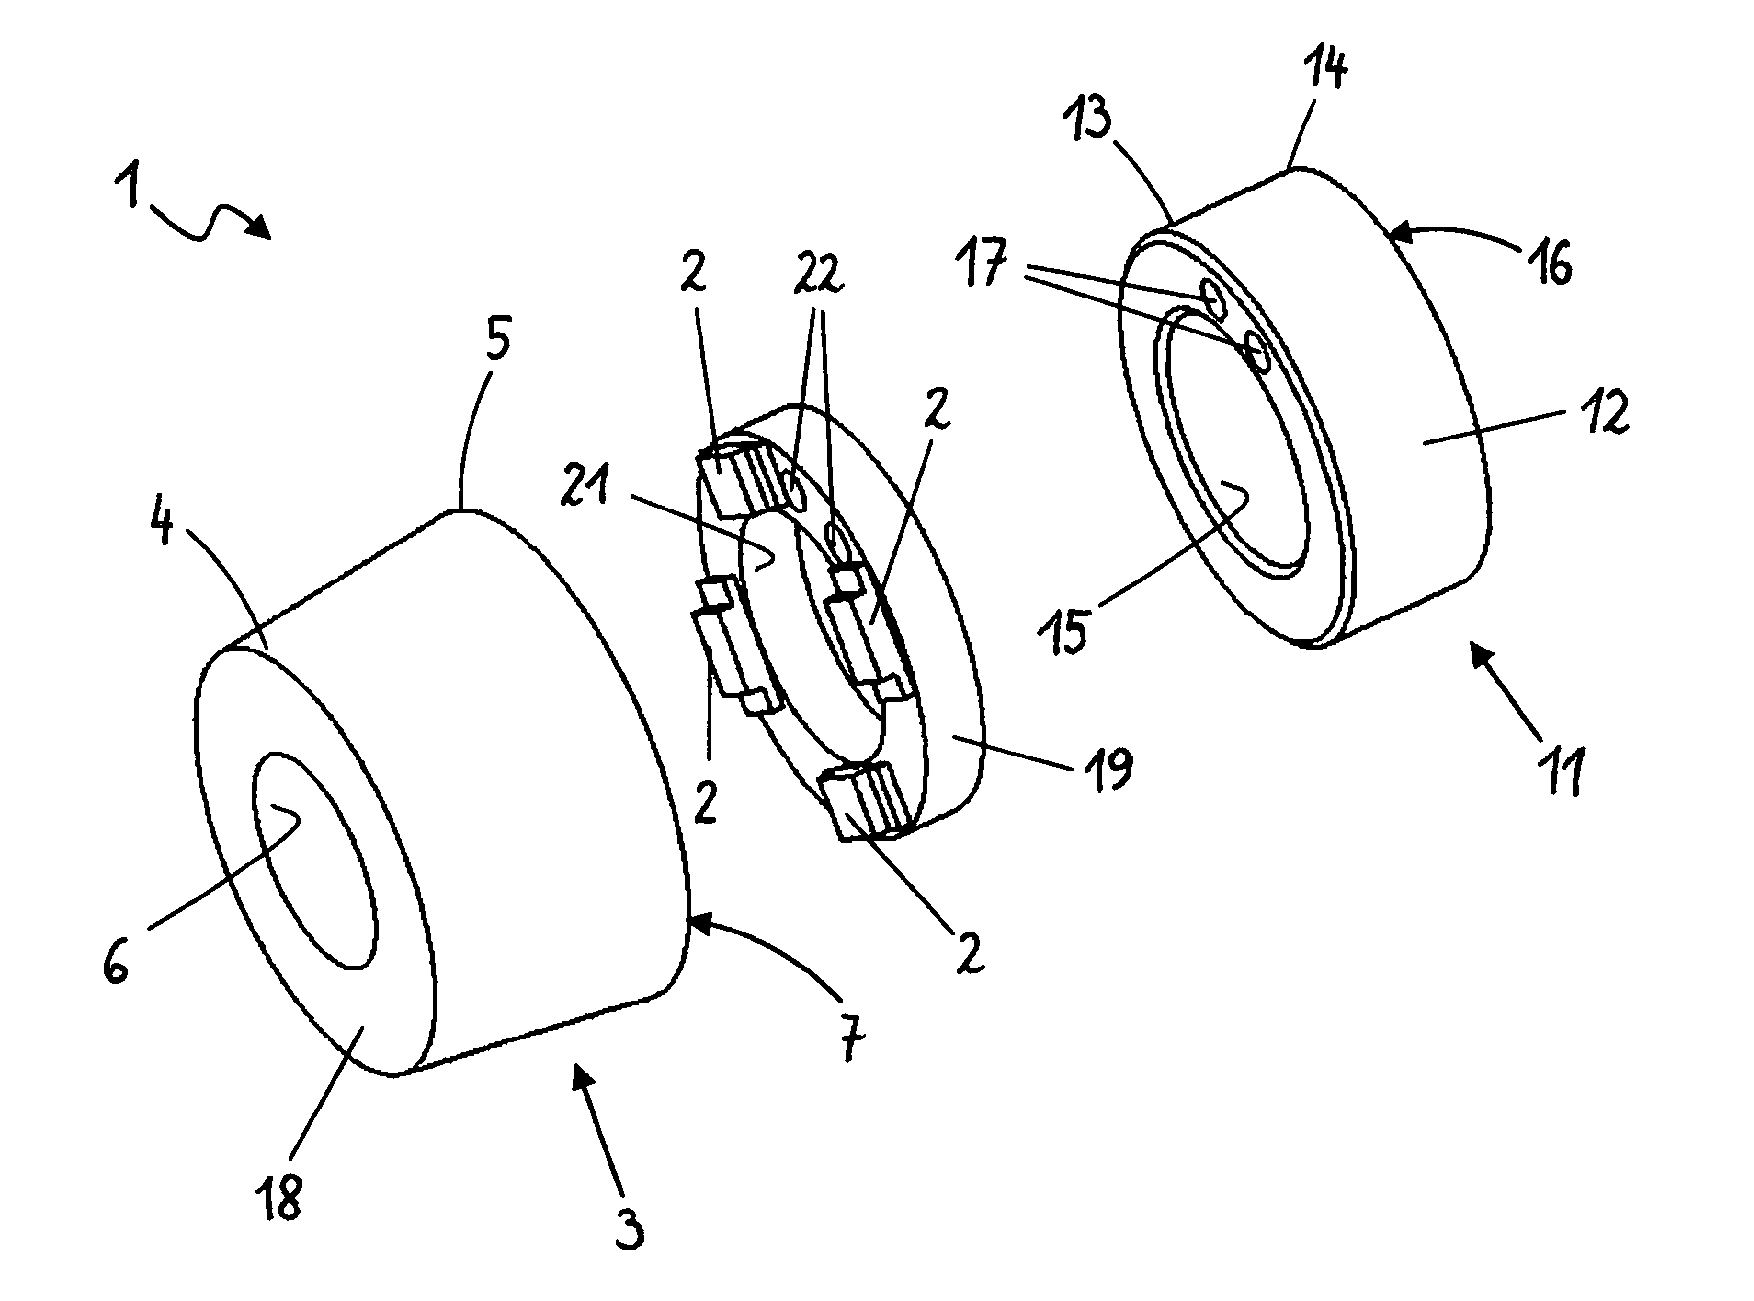 Medical handle device and illumination apparatus